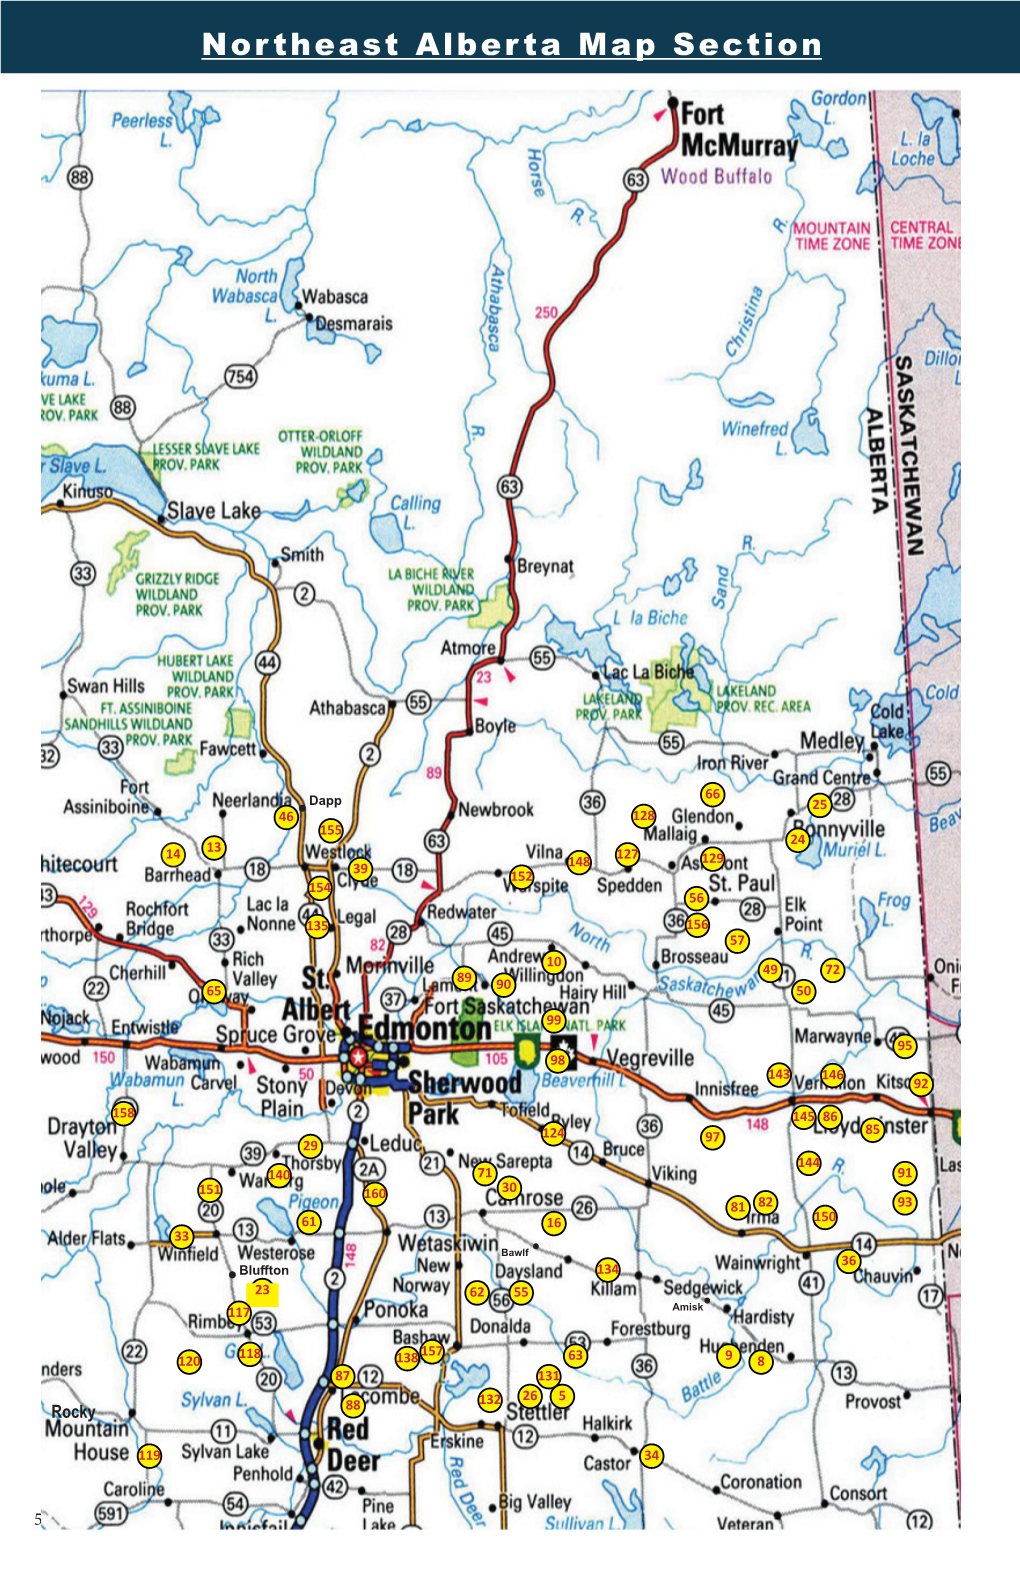 Northeast Alberta Map Section Northeast Alberta Member Information